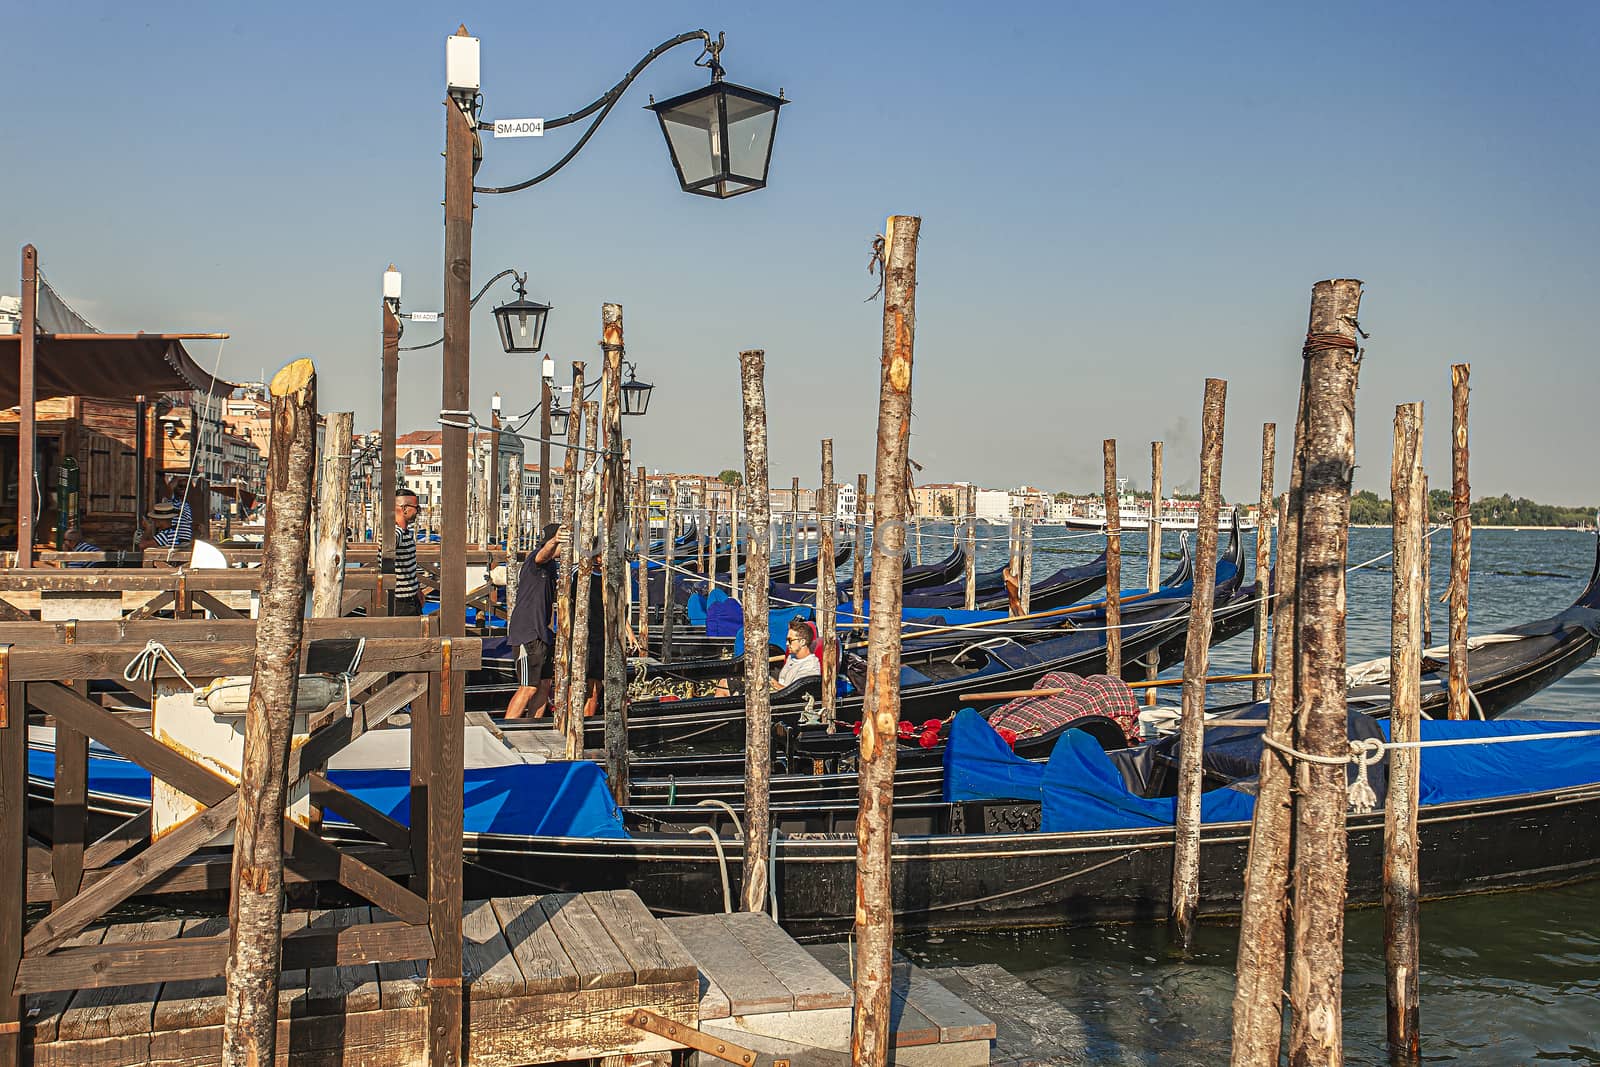 VENICE, ITALY 2 JULY 2020: Gondolas moored in San Marco square in Venice